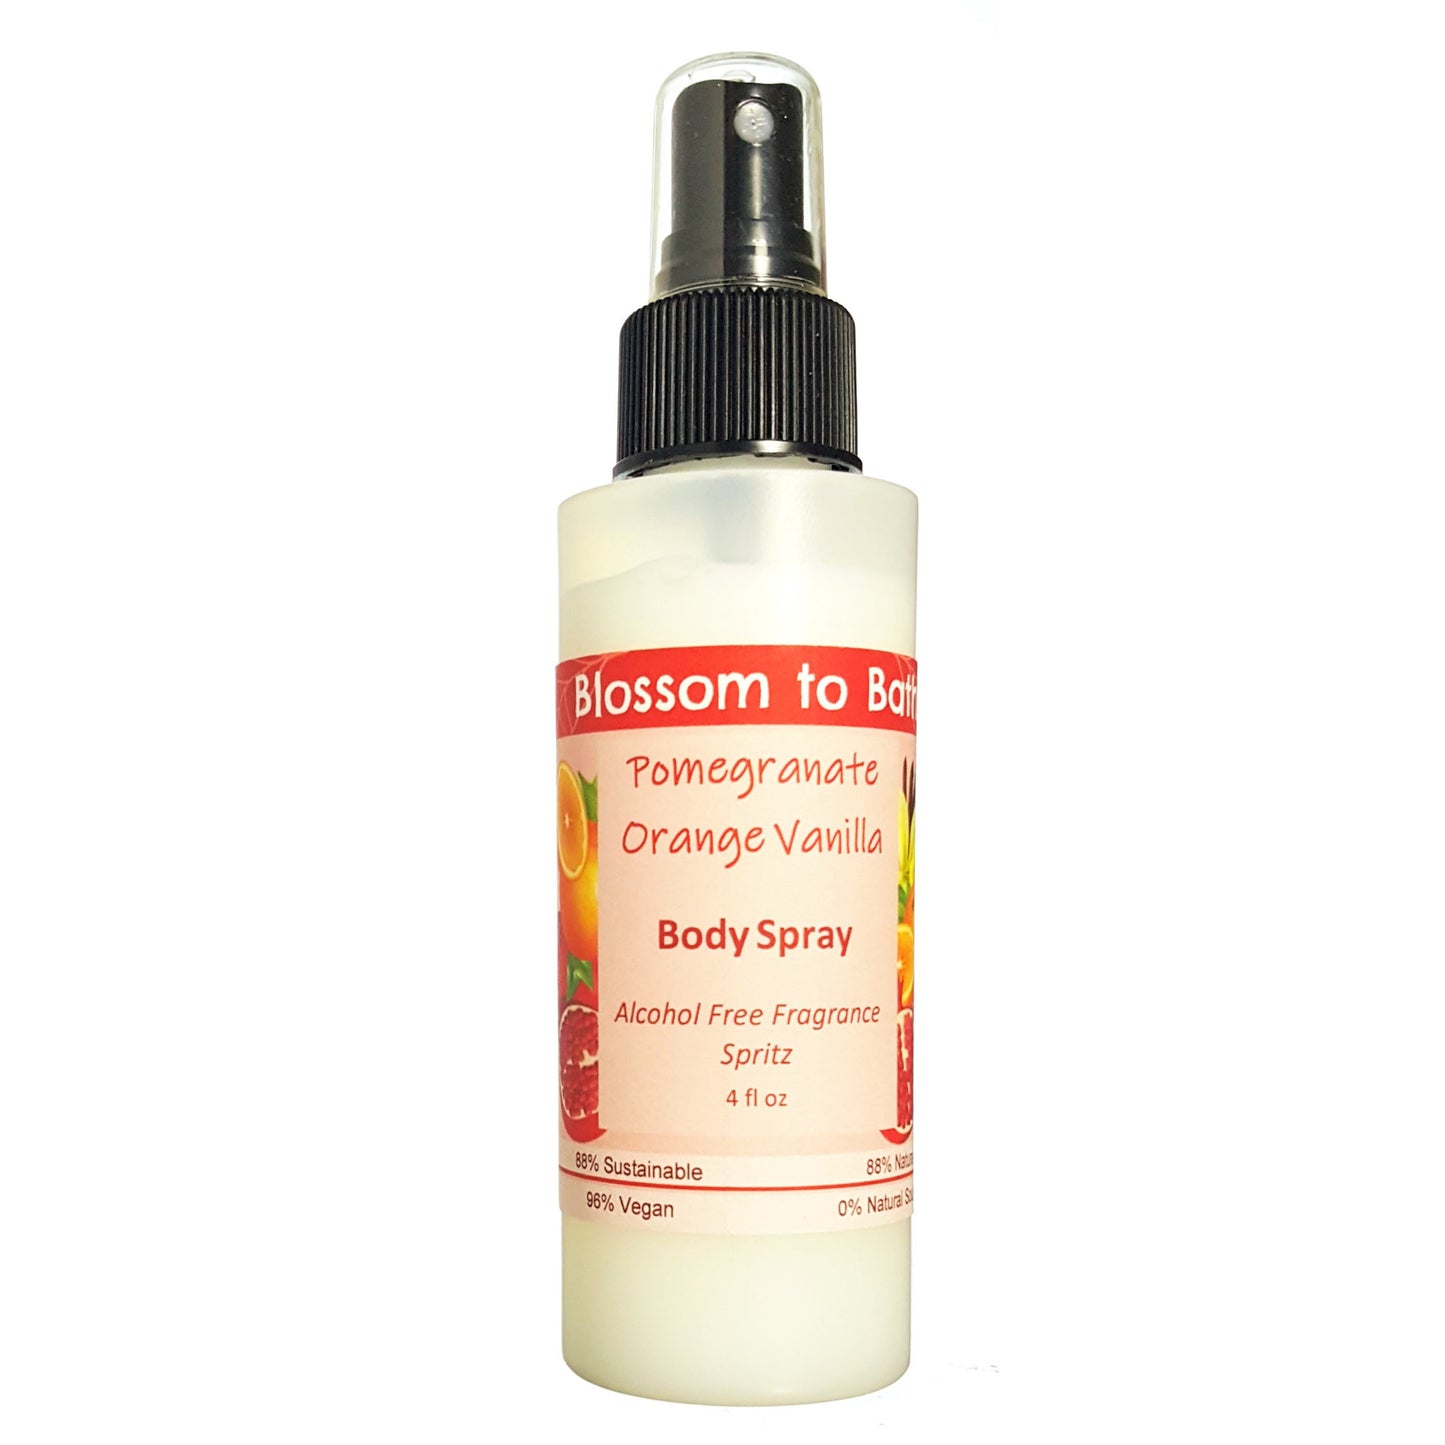 Buy Blossom to Bath Pomegranate Orange Vanilla Body Spray from Flowersong Soap Studio.  Natural luxury freshening of skin, linens, or air  